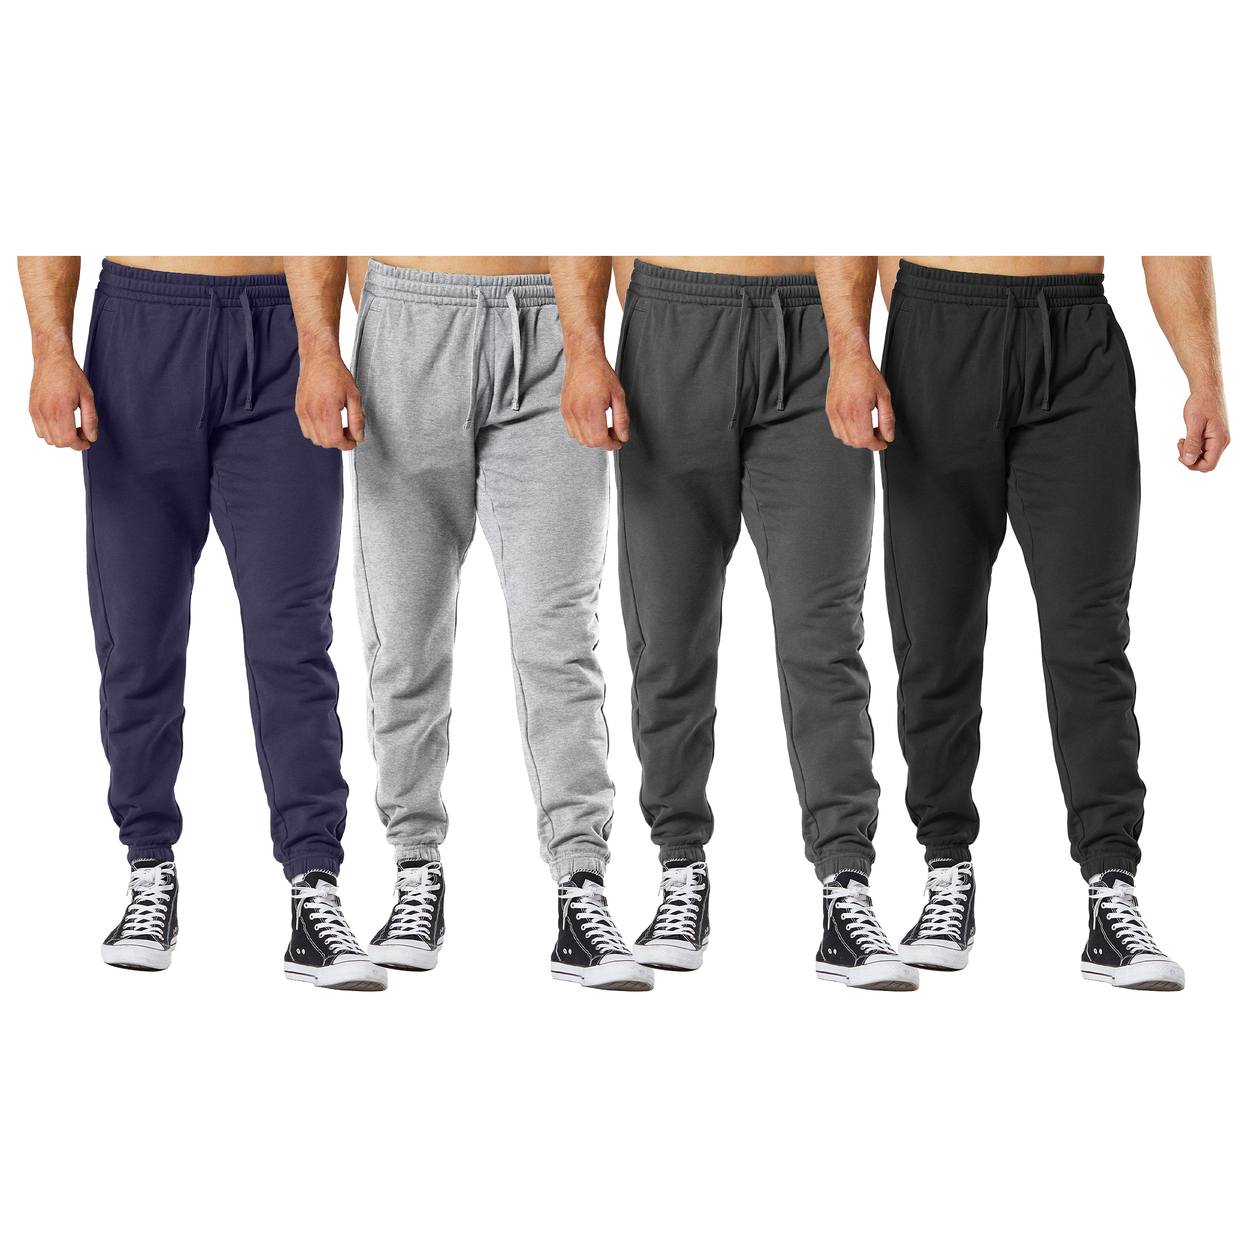 Men's Ultra-Soft Cozy Winter Warm Casual Fleece Lined Sweatpants Jogger - Charcoal, Medium